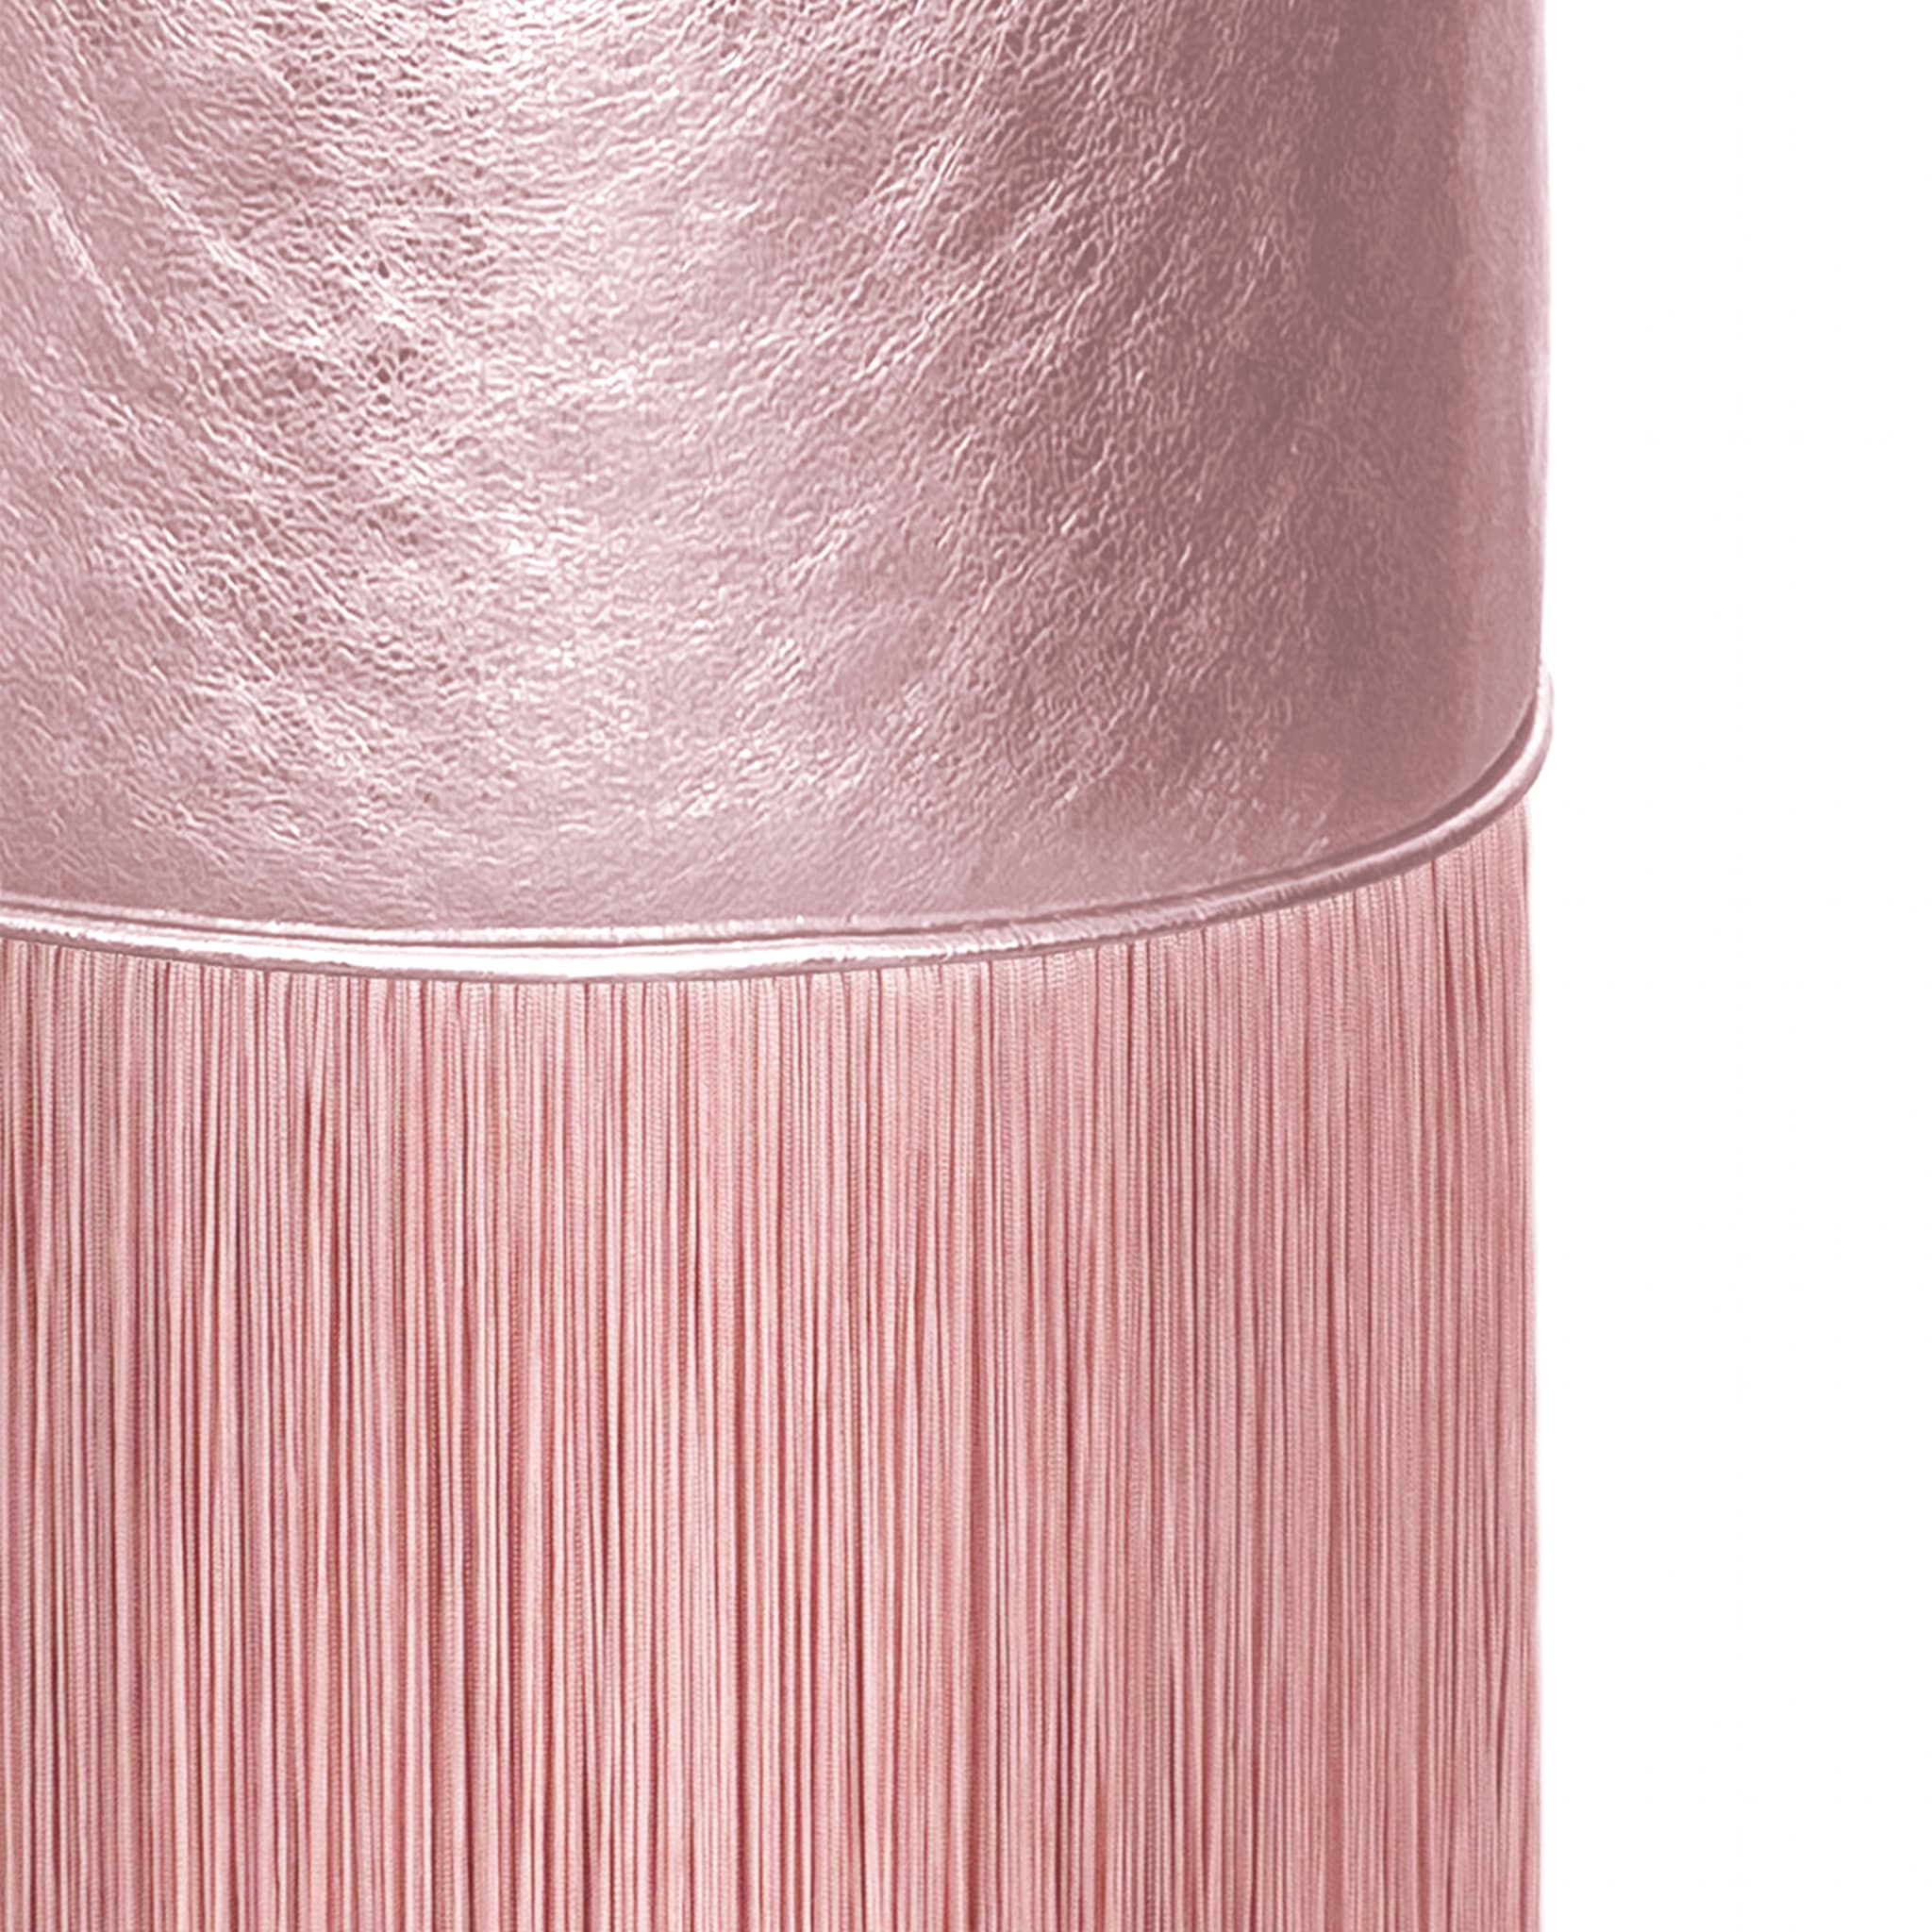 Gleaming Light Pink Metallic Leather Pouf by Lorenza Bozzoli - Alternative view 1